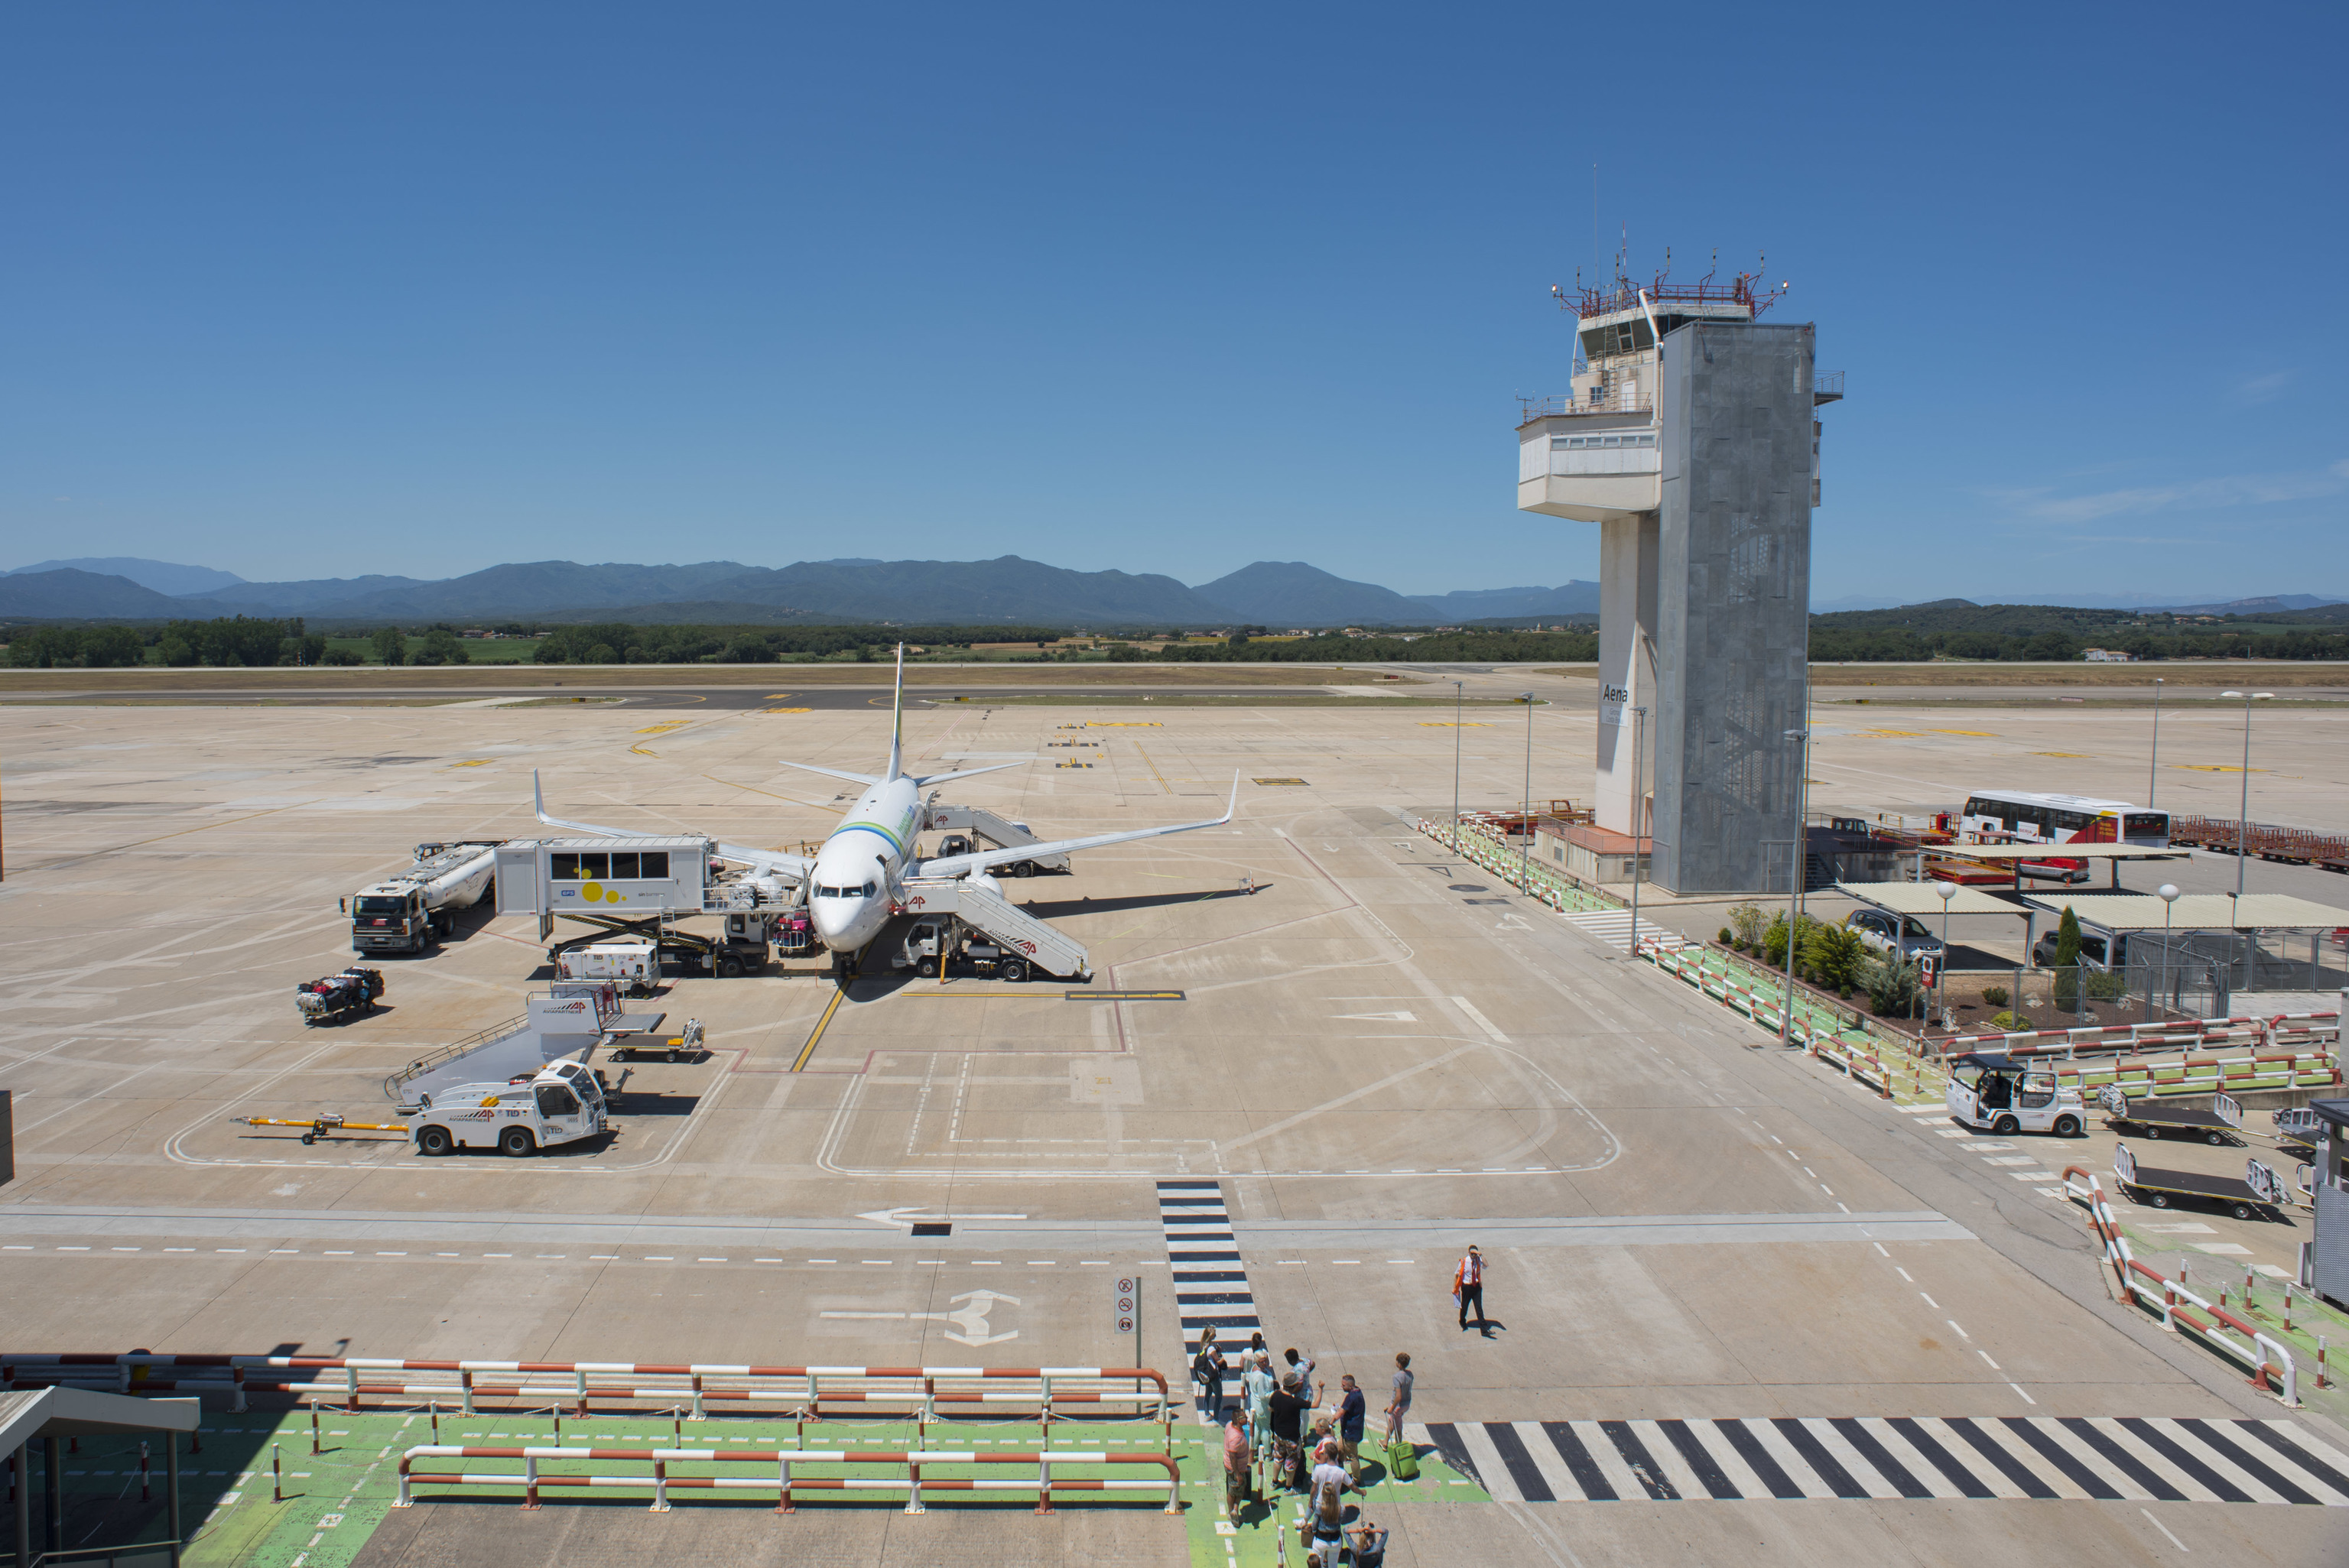 Aeropuerto de Girona-Costa Brava.